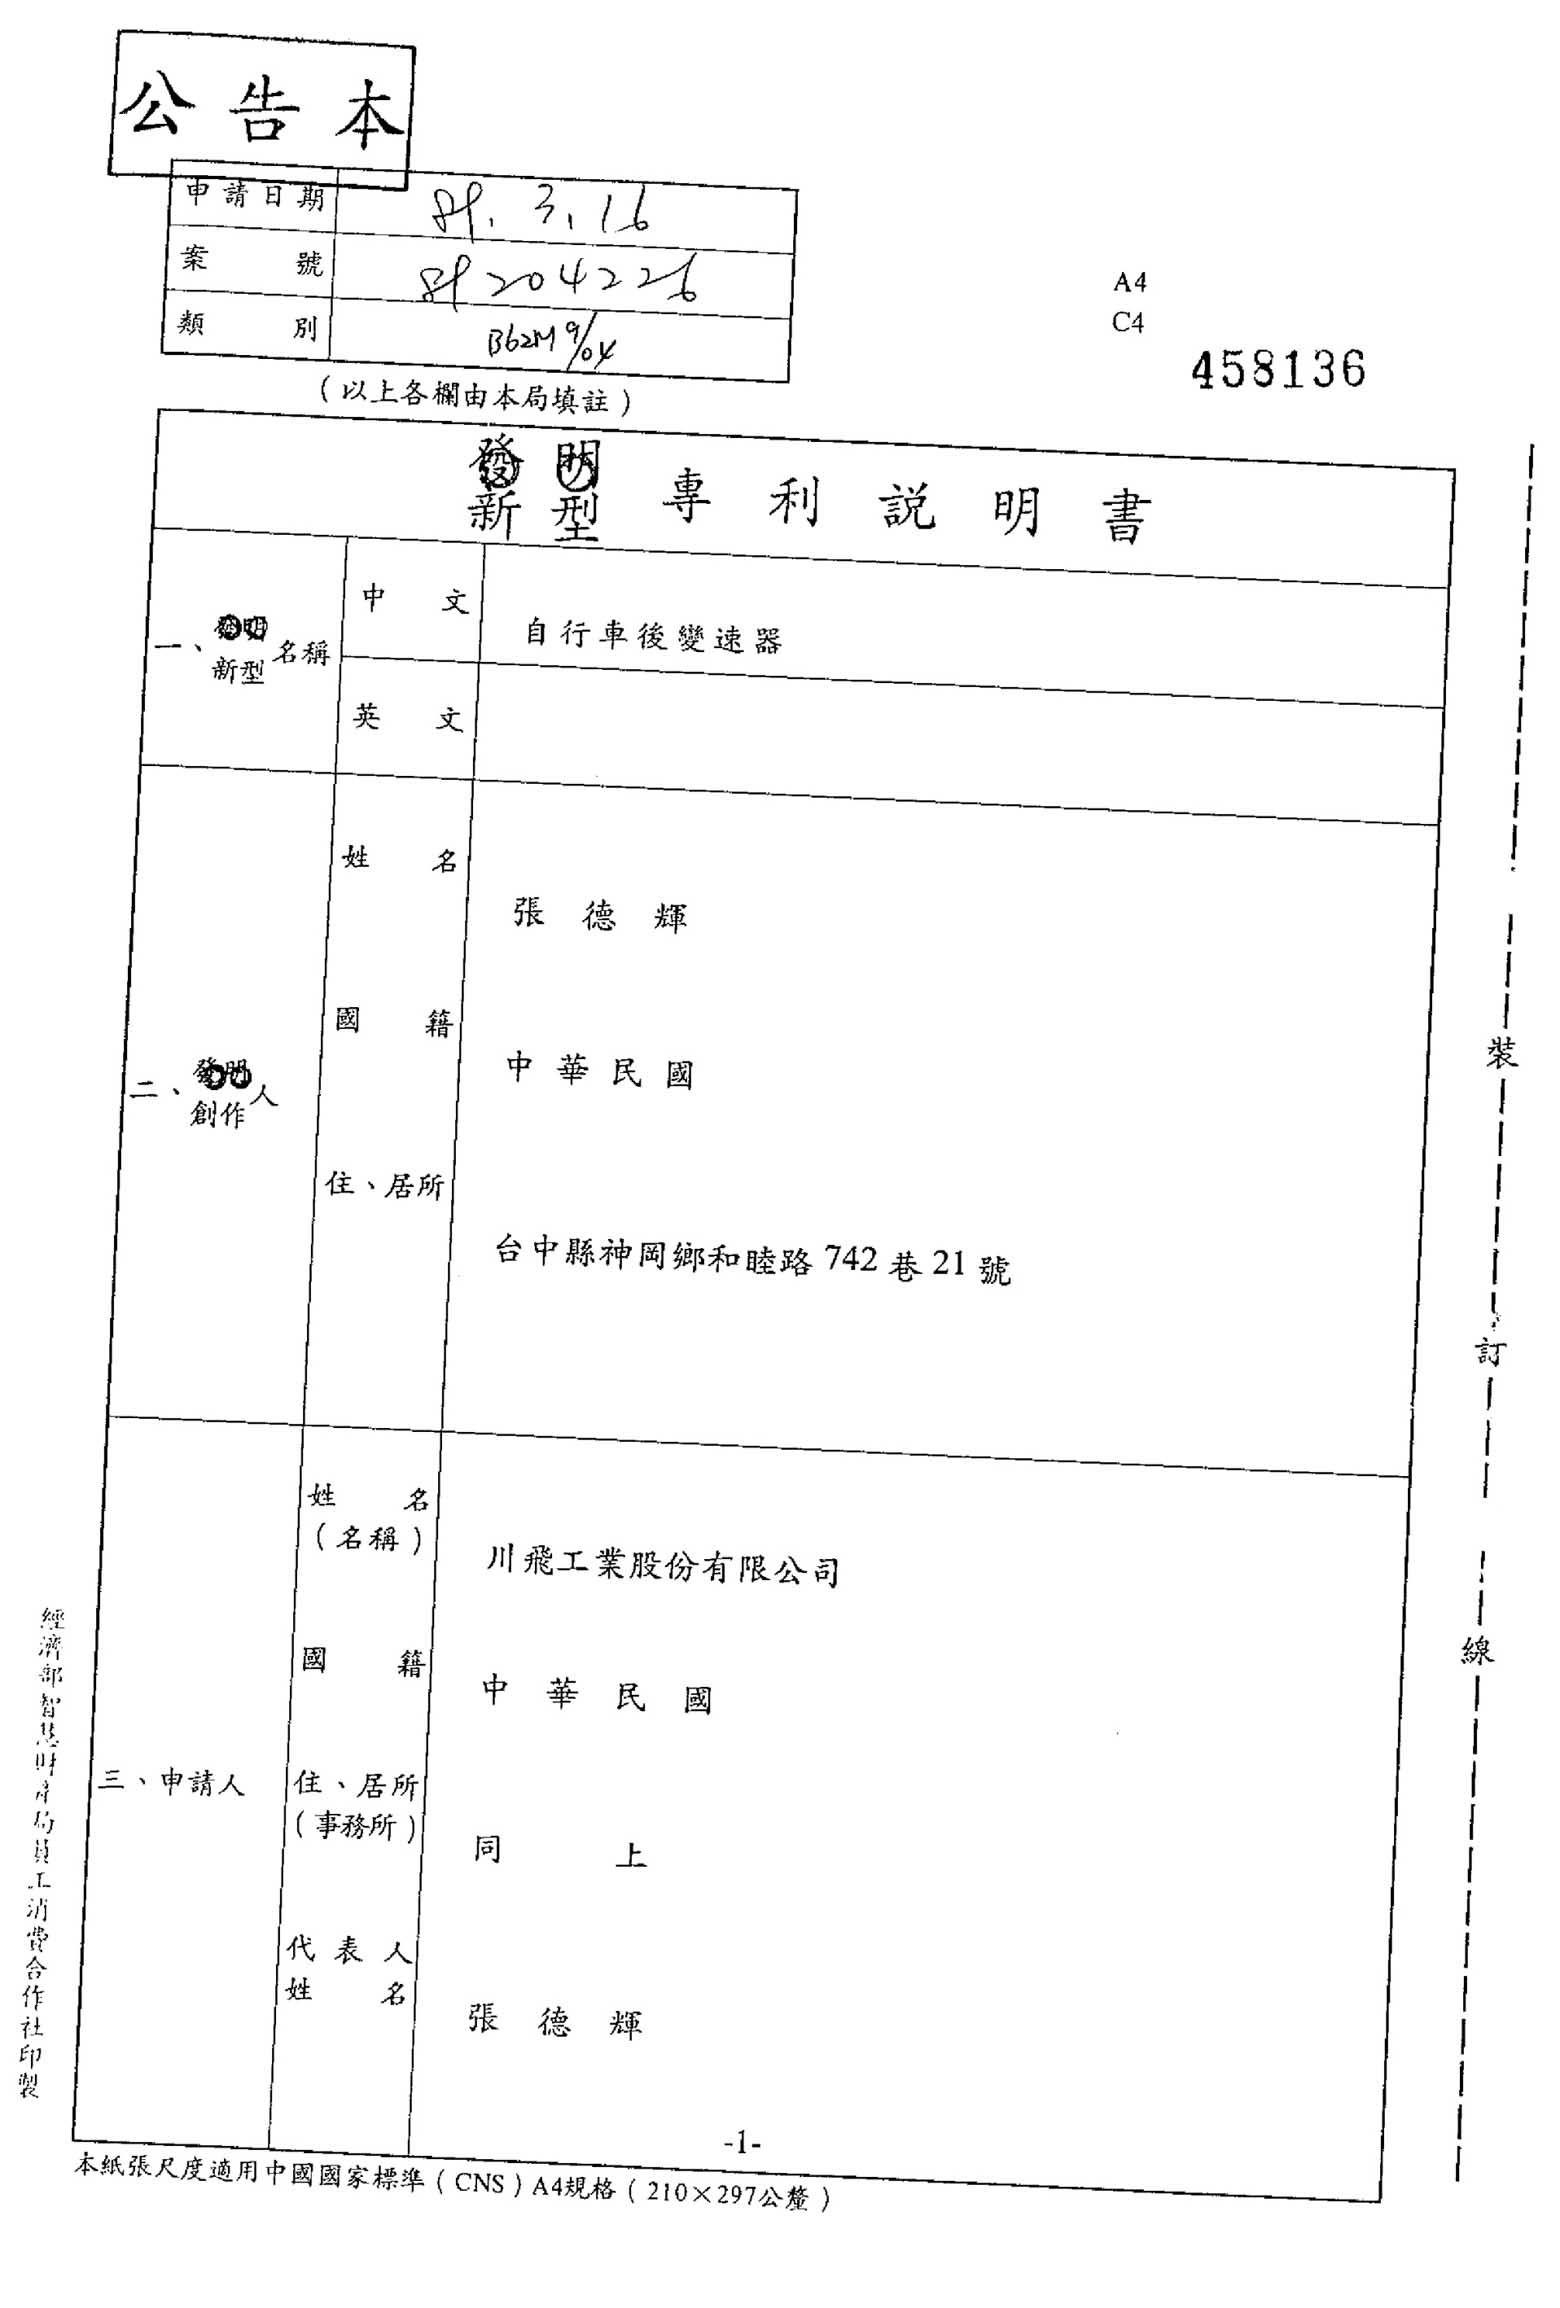 Taiwan patent 458,136 - Falcon scan 1 main image